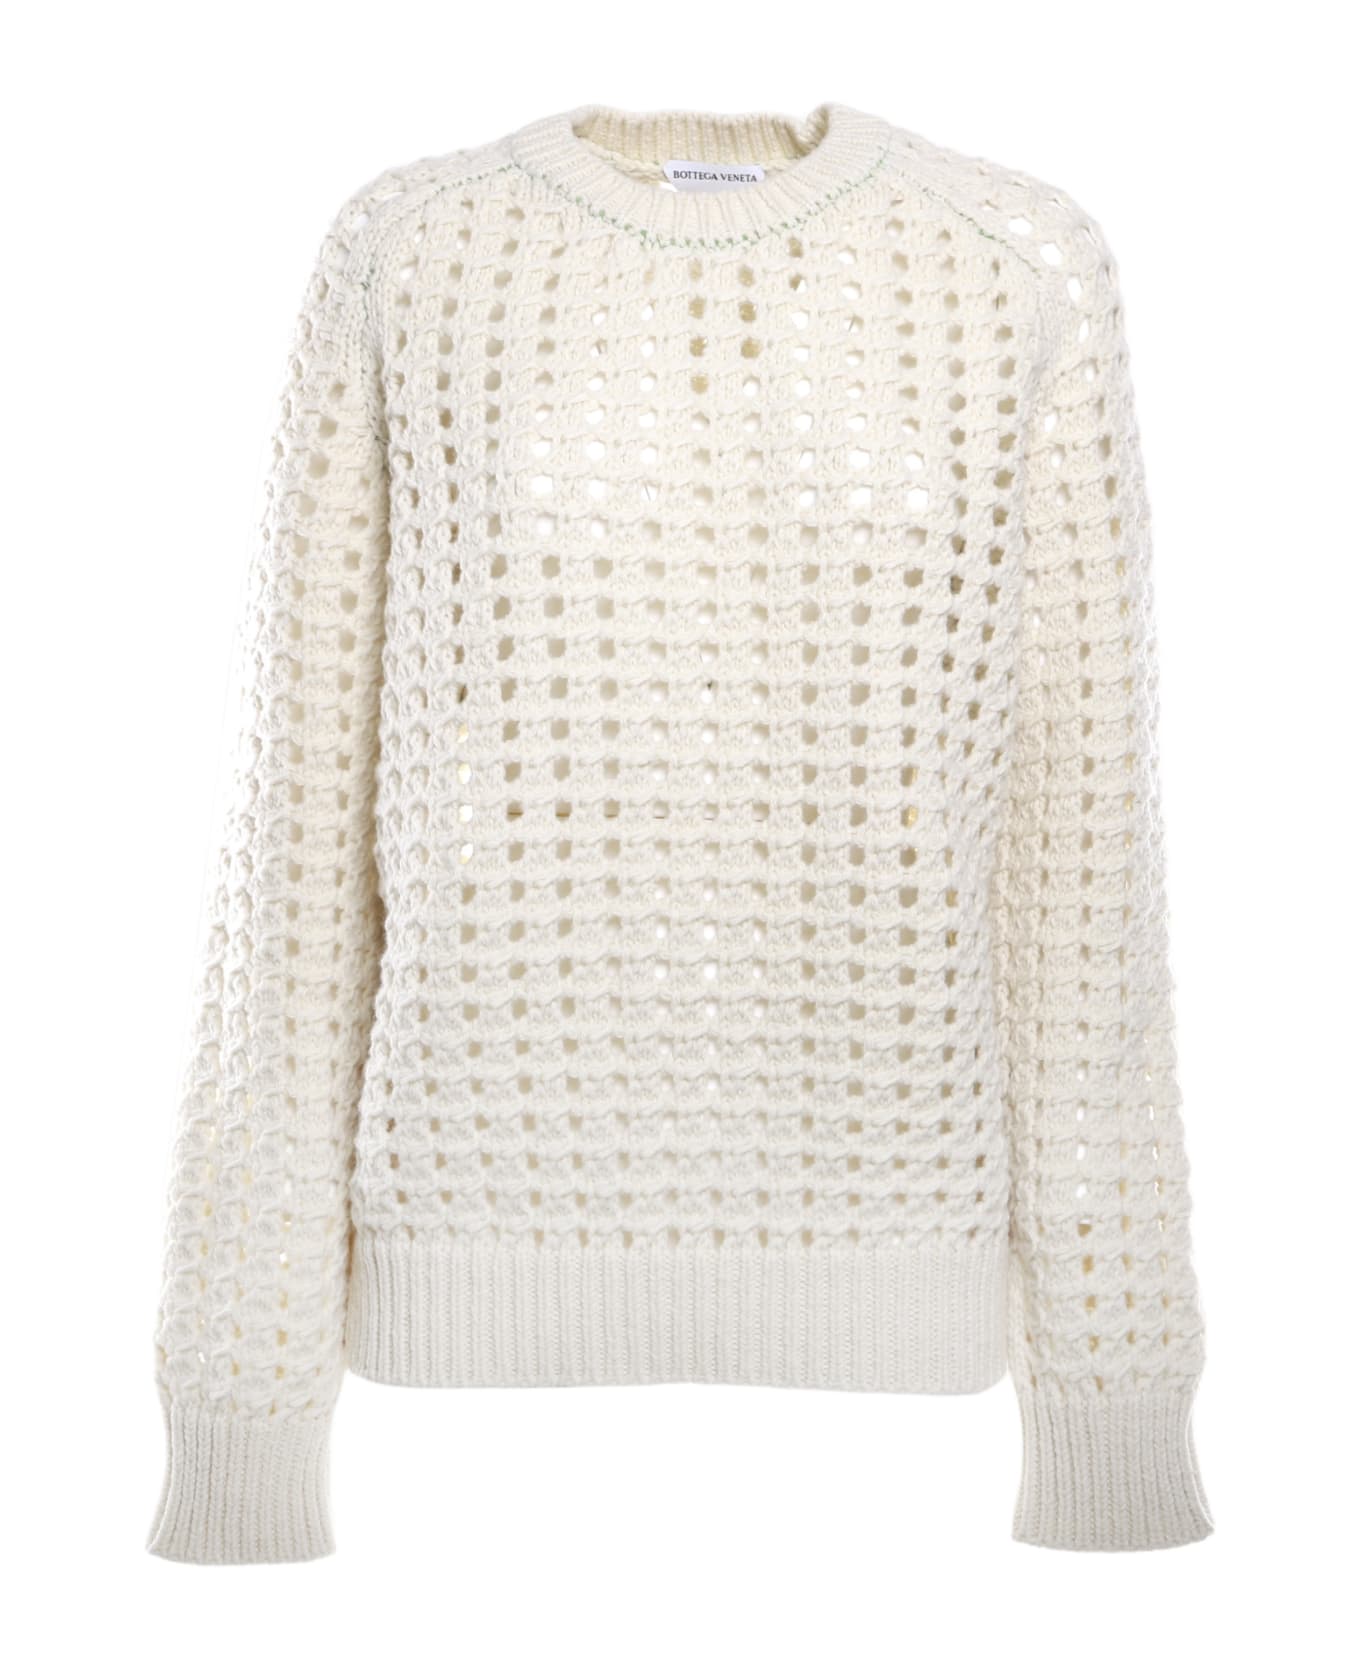 Bottega Veneta Wool Sweater With Perforated Details - Chalk